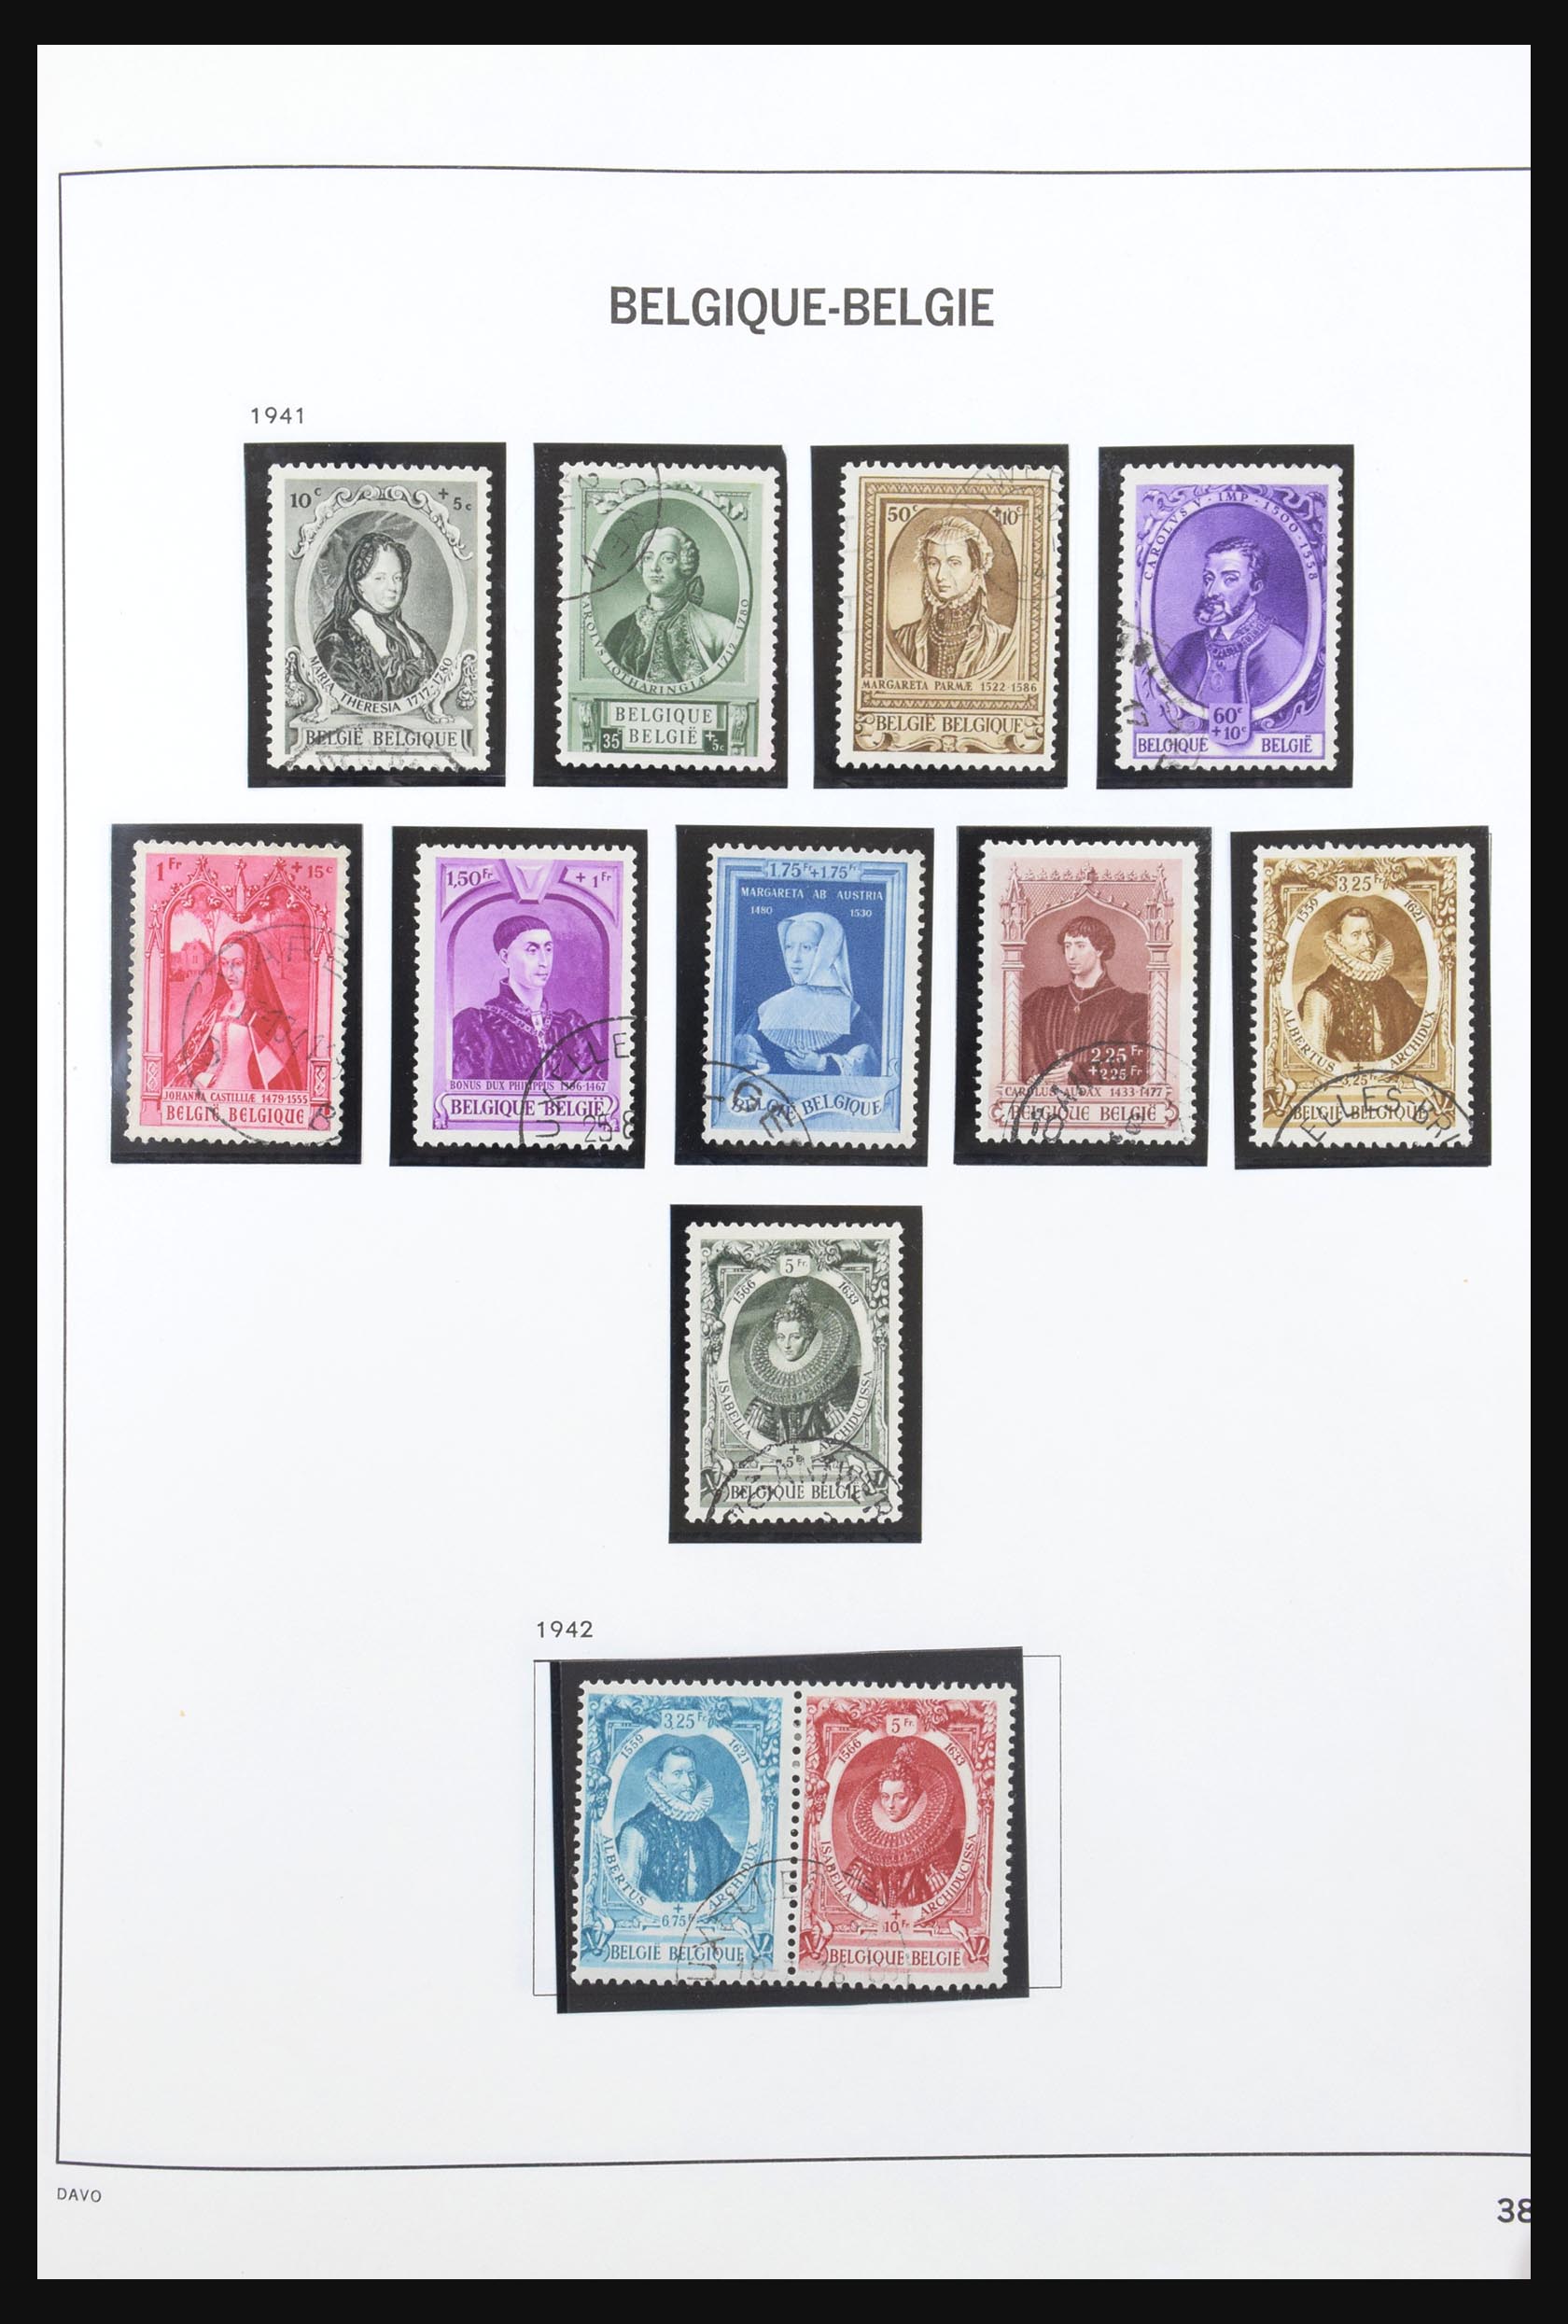 31178 103 - 31178 België 1849-1951.